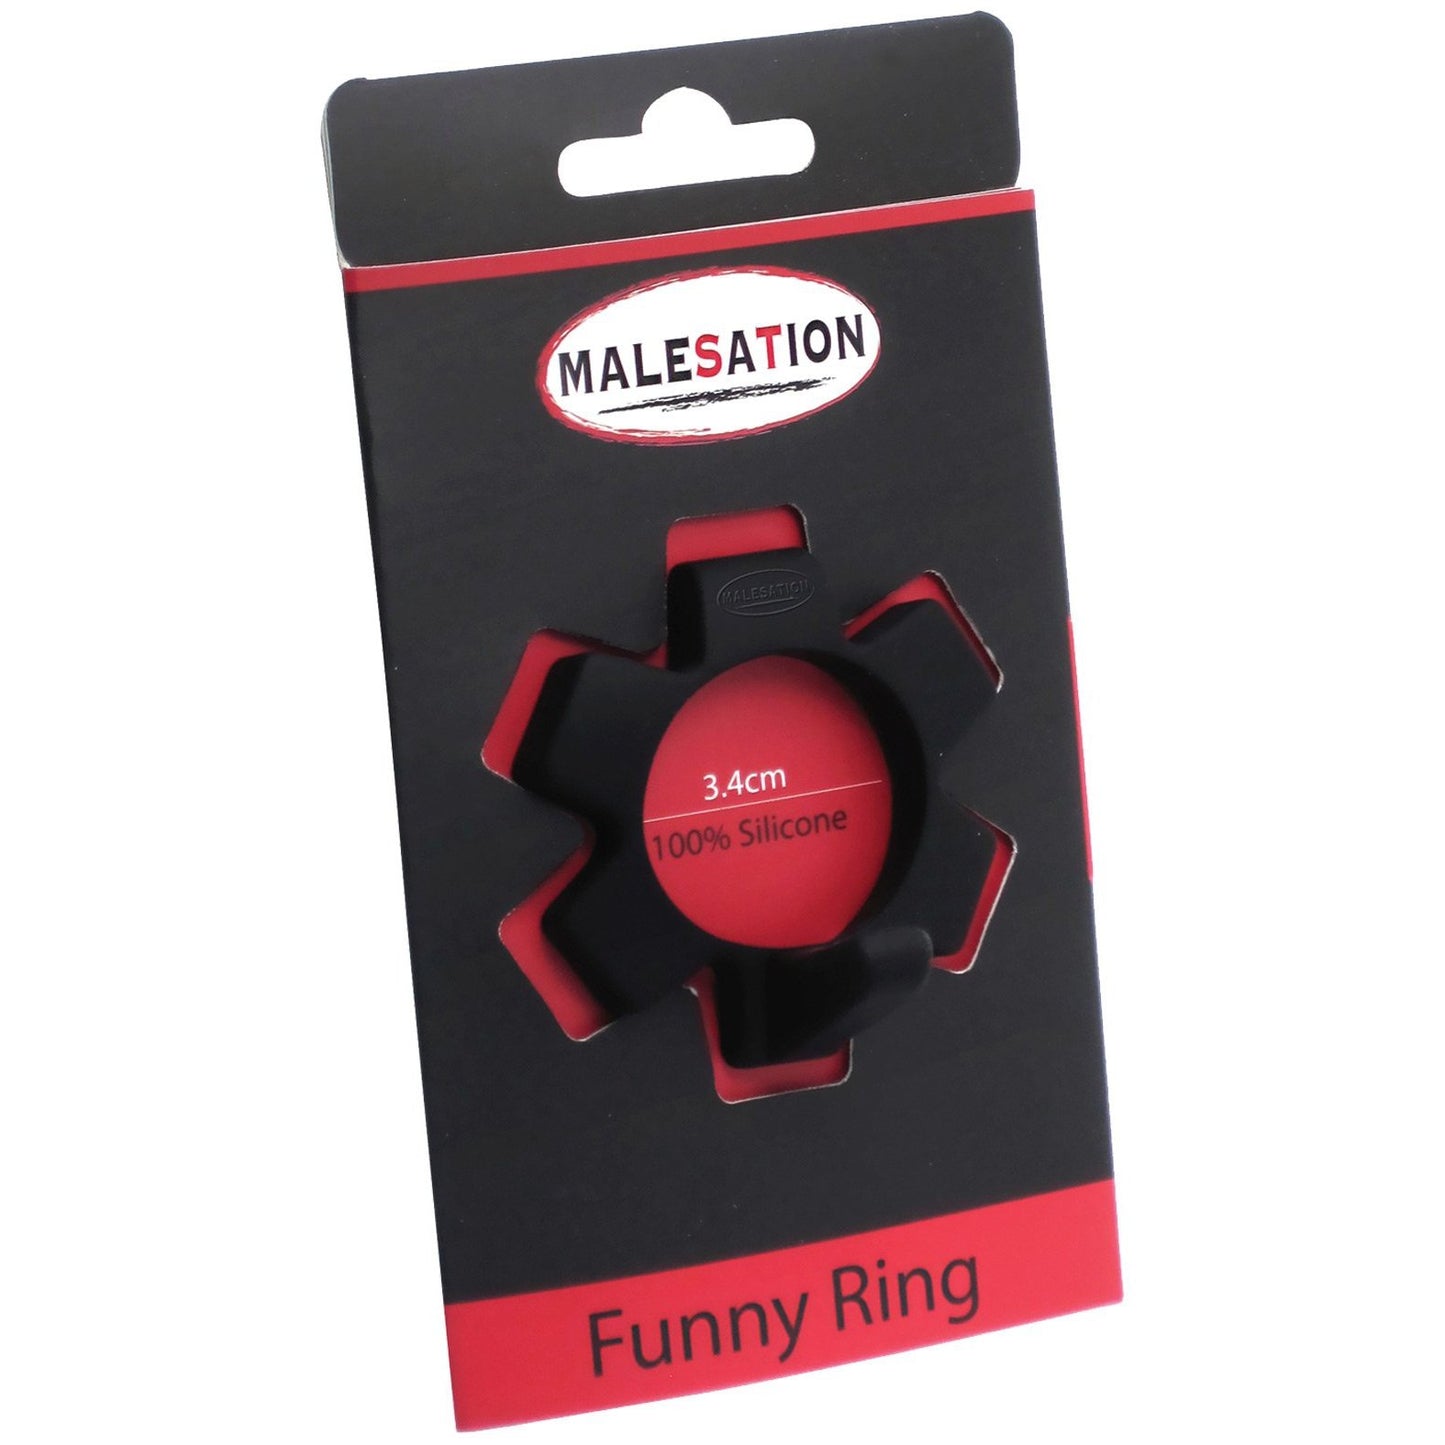 Malesation Funny Ring